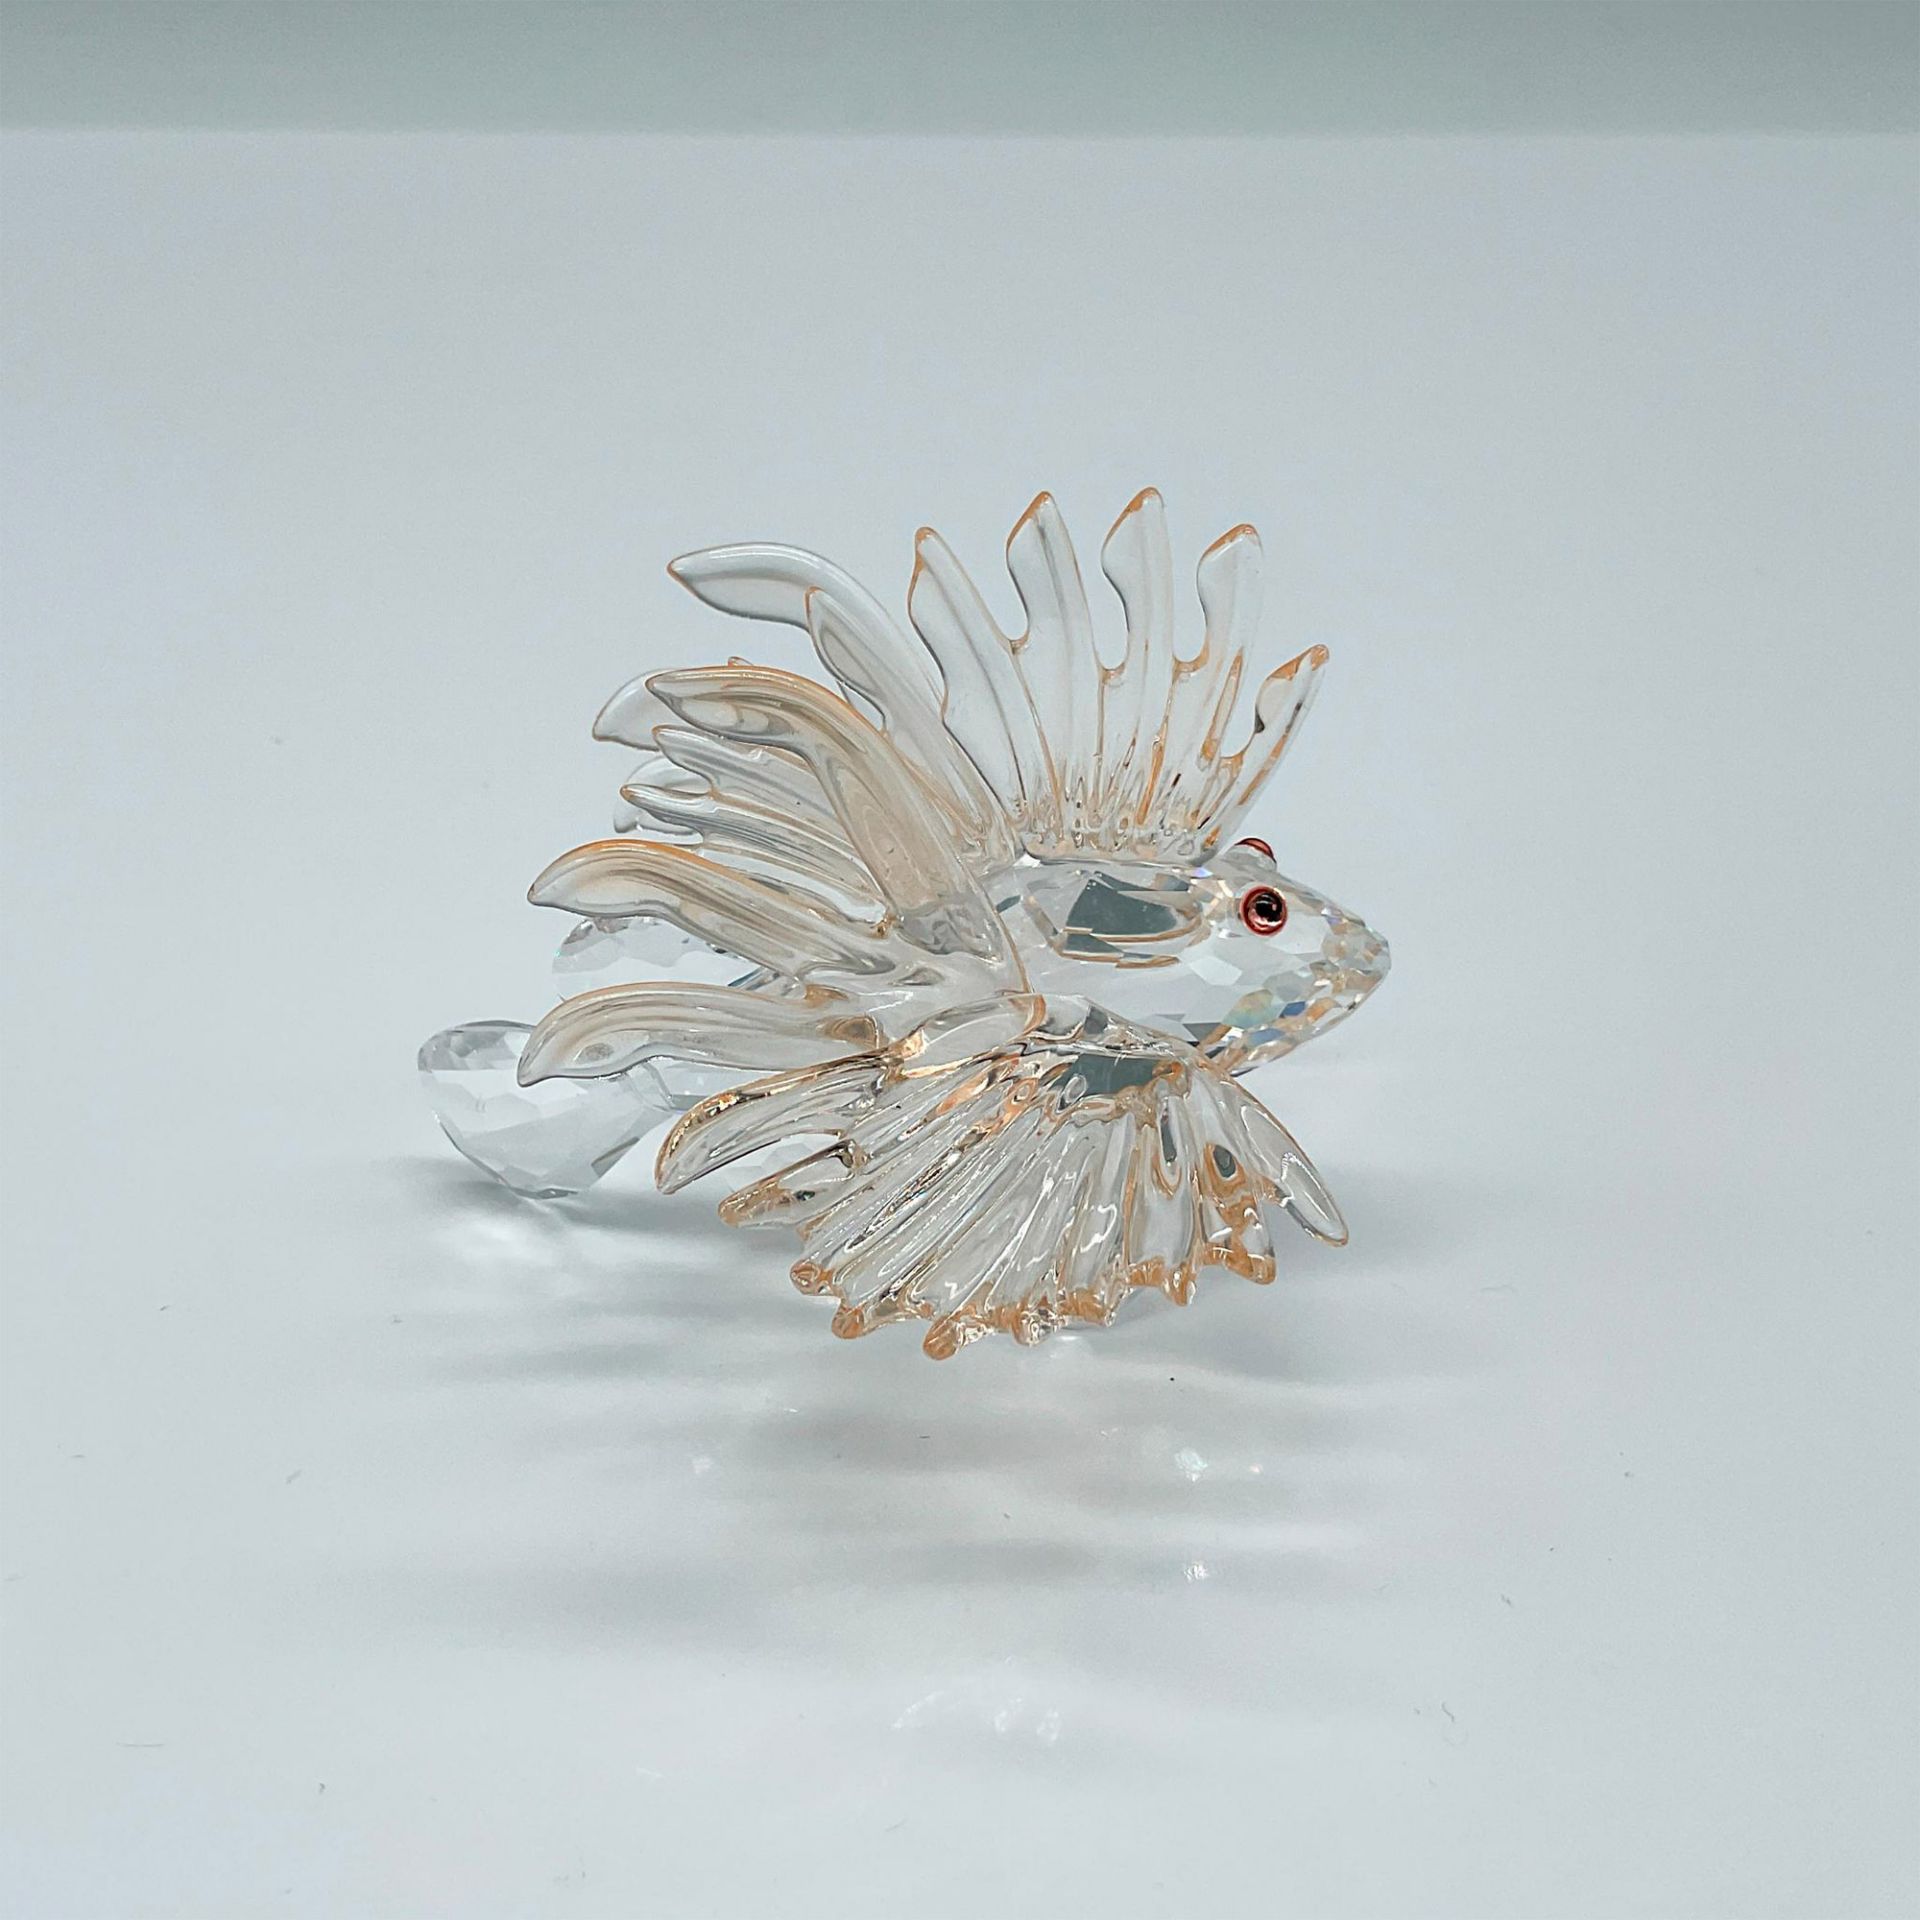 Swarovski Crystal Figurine, Lionfish - Image 2 of 4